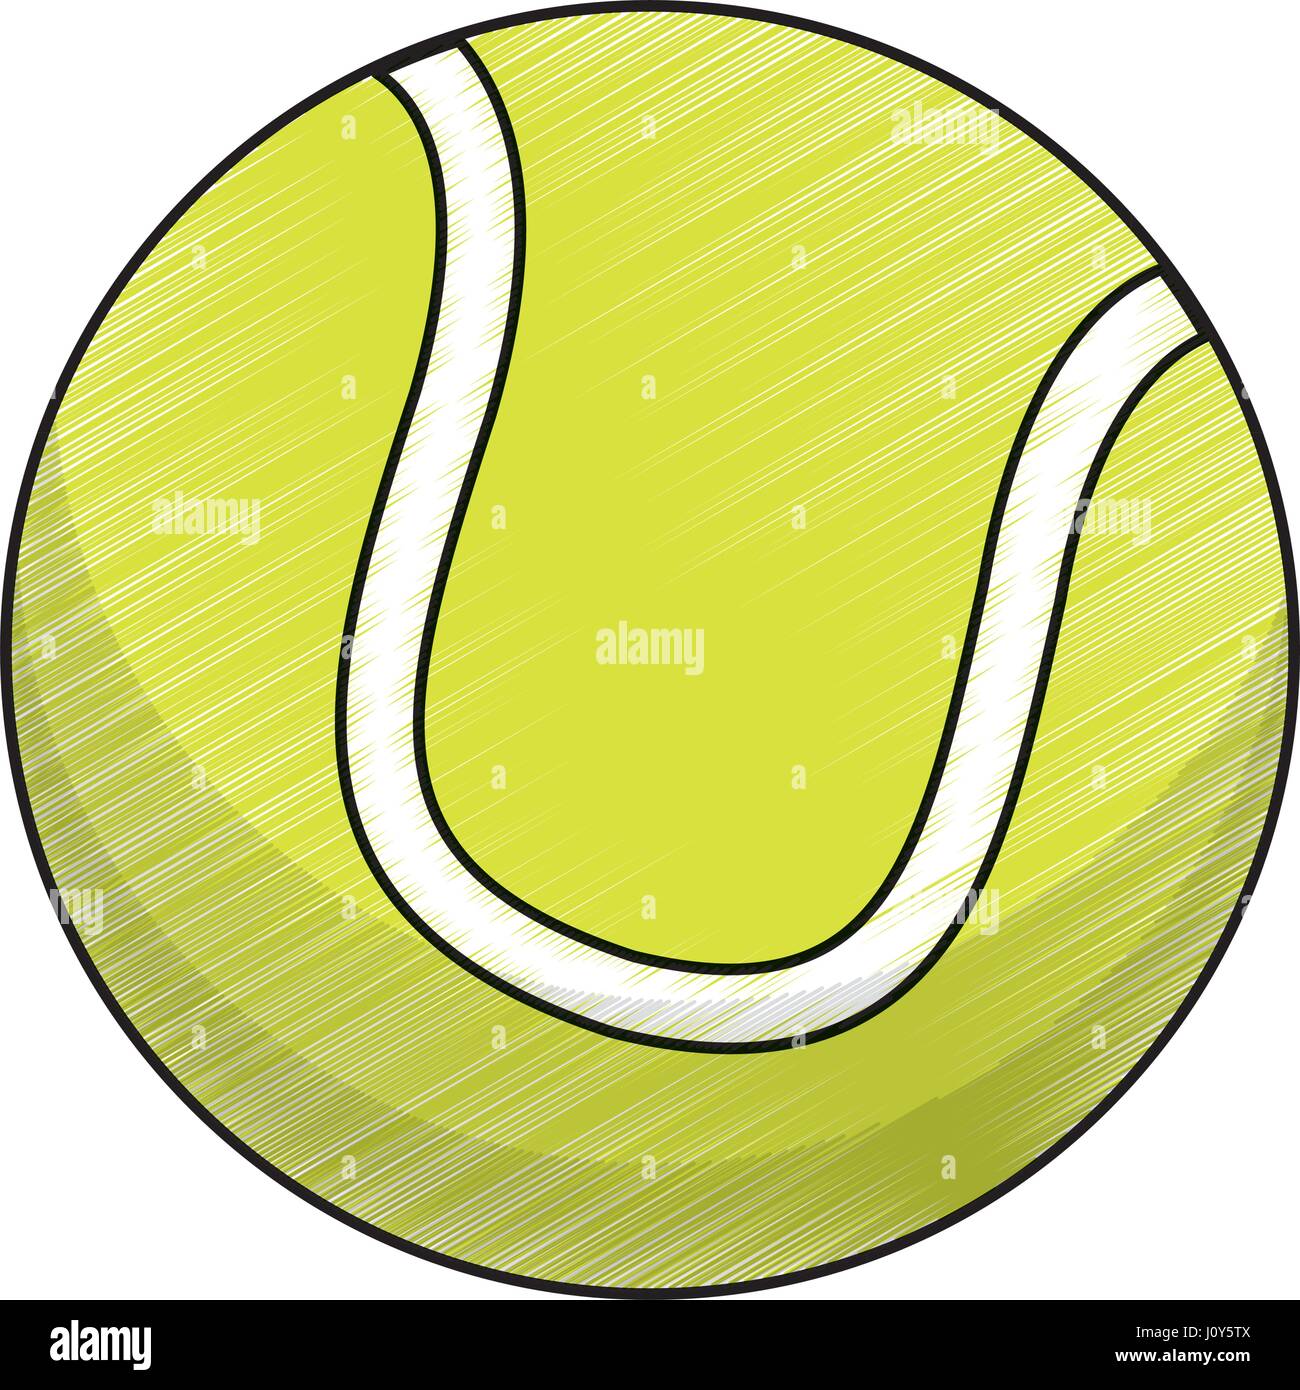 drawing tennis ball equipment Stock Vector Image & Art - Alamy